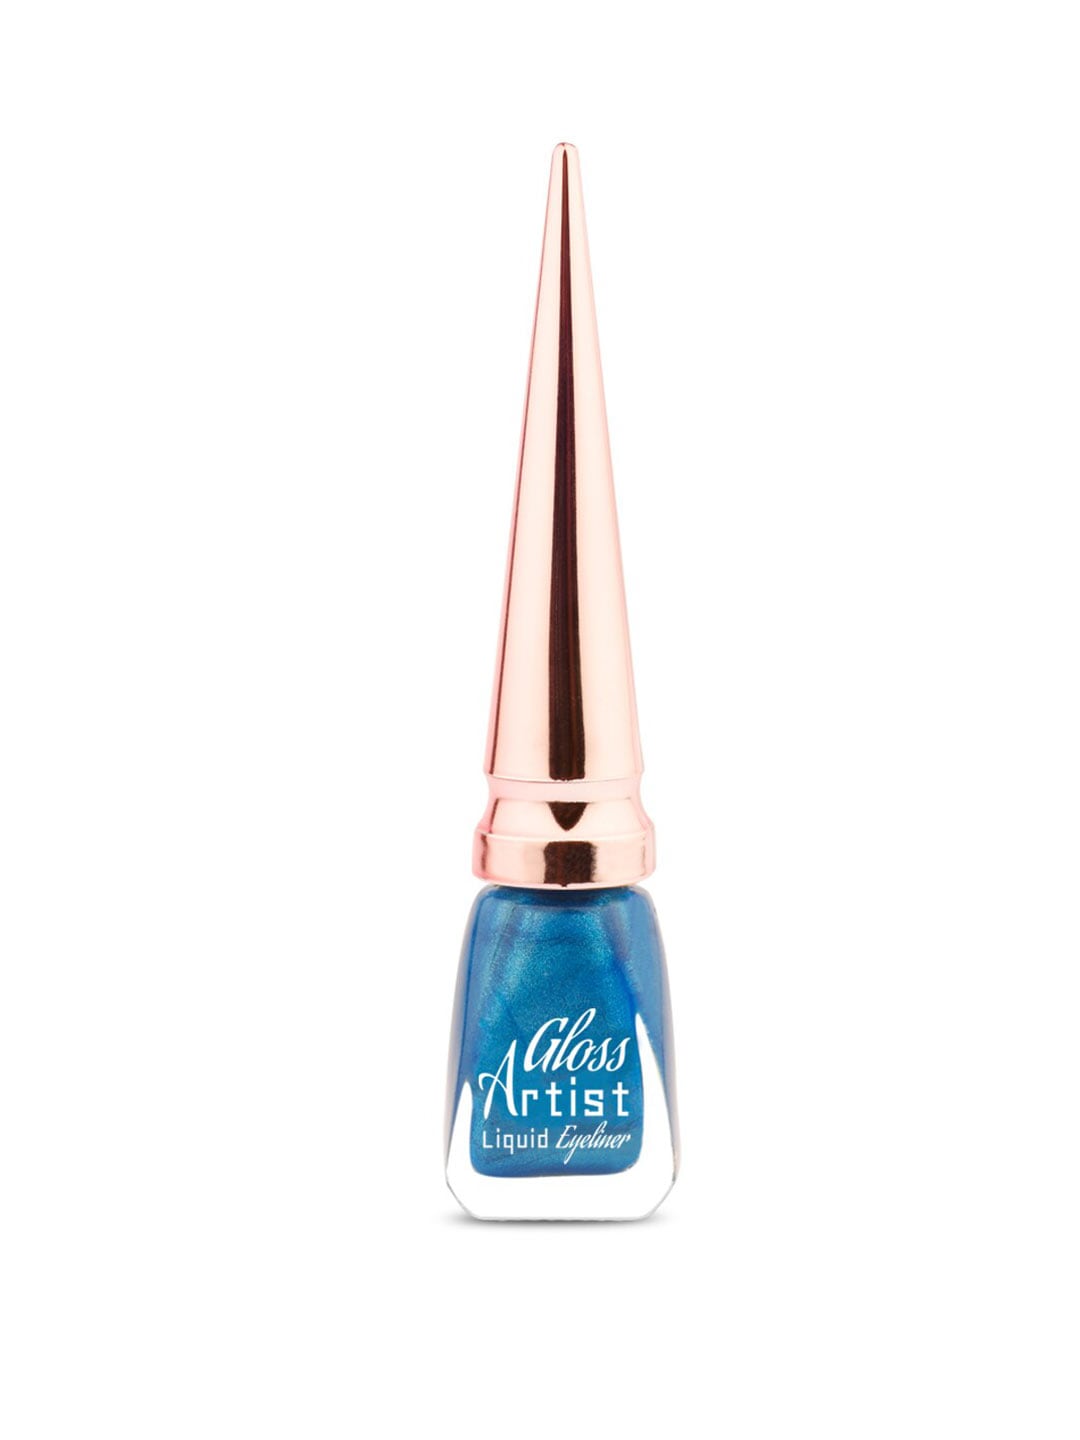 MILAP Gloss Artist liquid Eyeliner Magical Blue 6ml Price in India